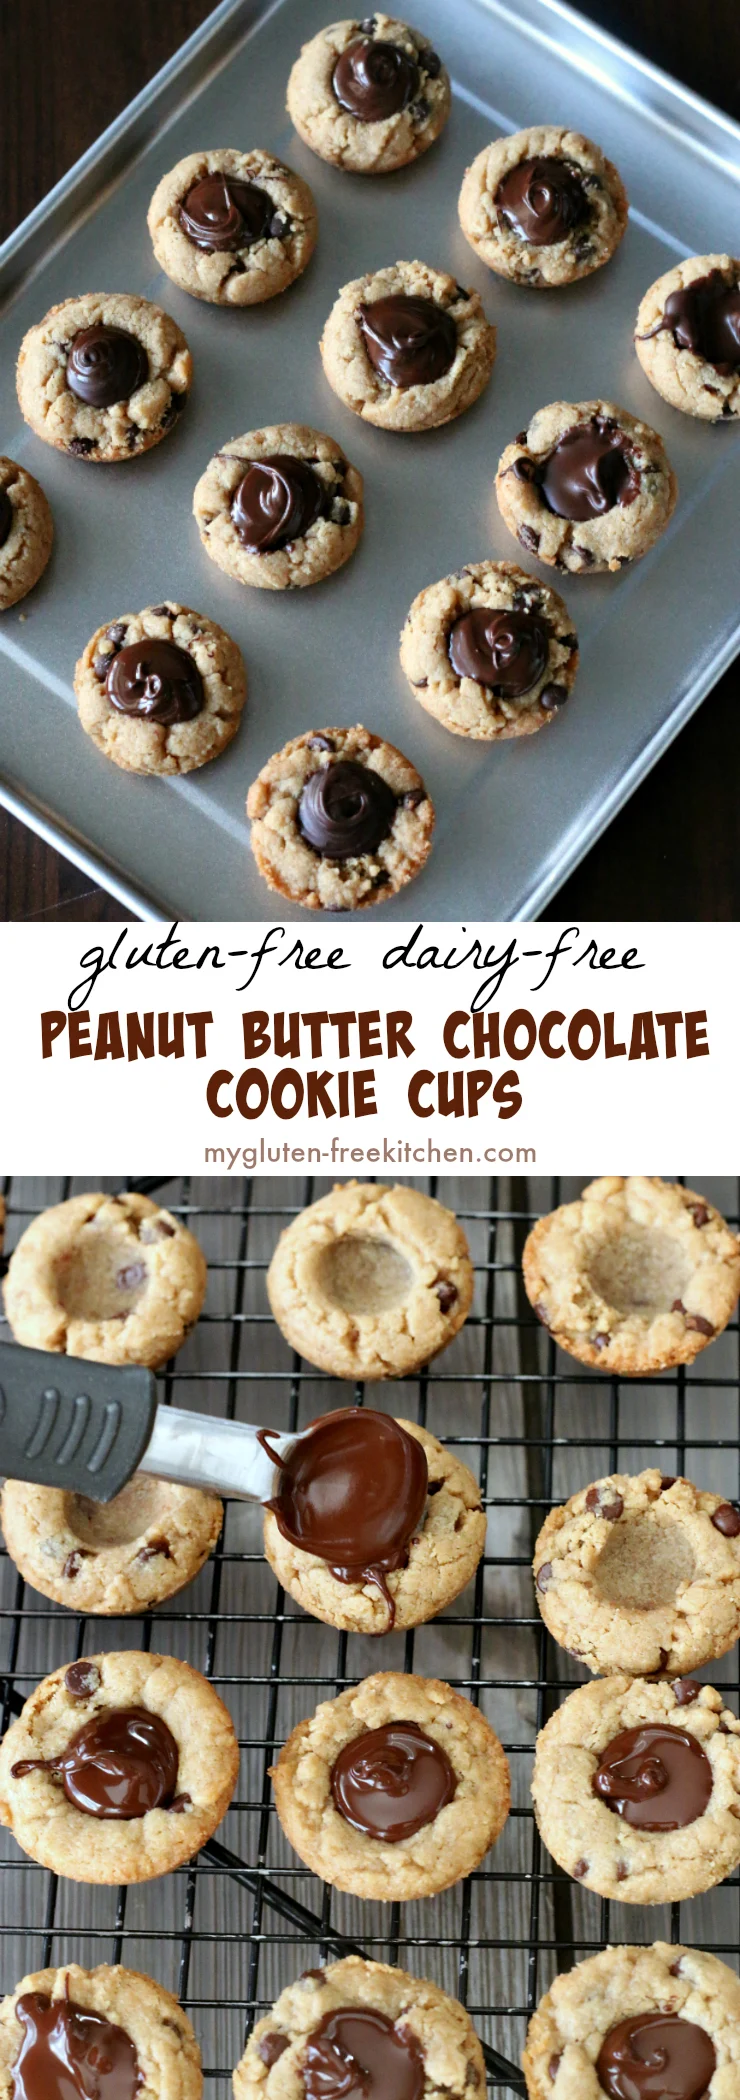 Gluten-free Peanut Butter Chocolate Cookie Cups dairy-free too. Fun #glutenfreerecipe #glutenfreecookies 